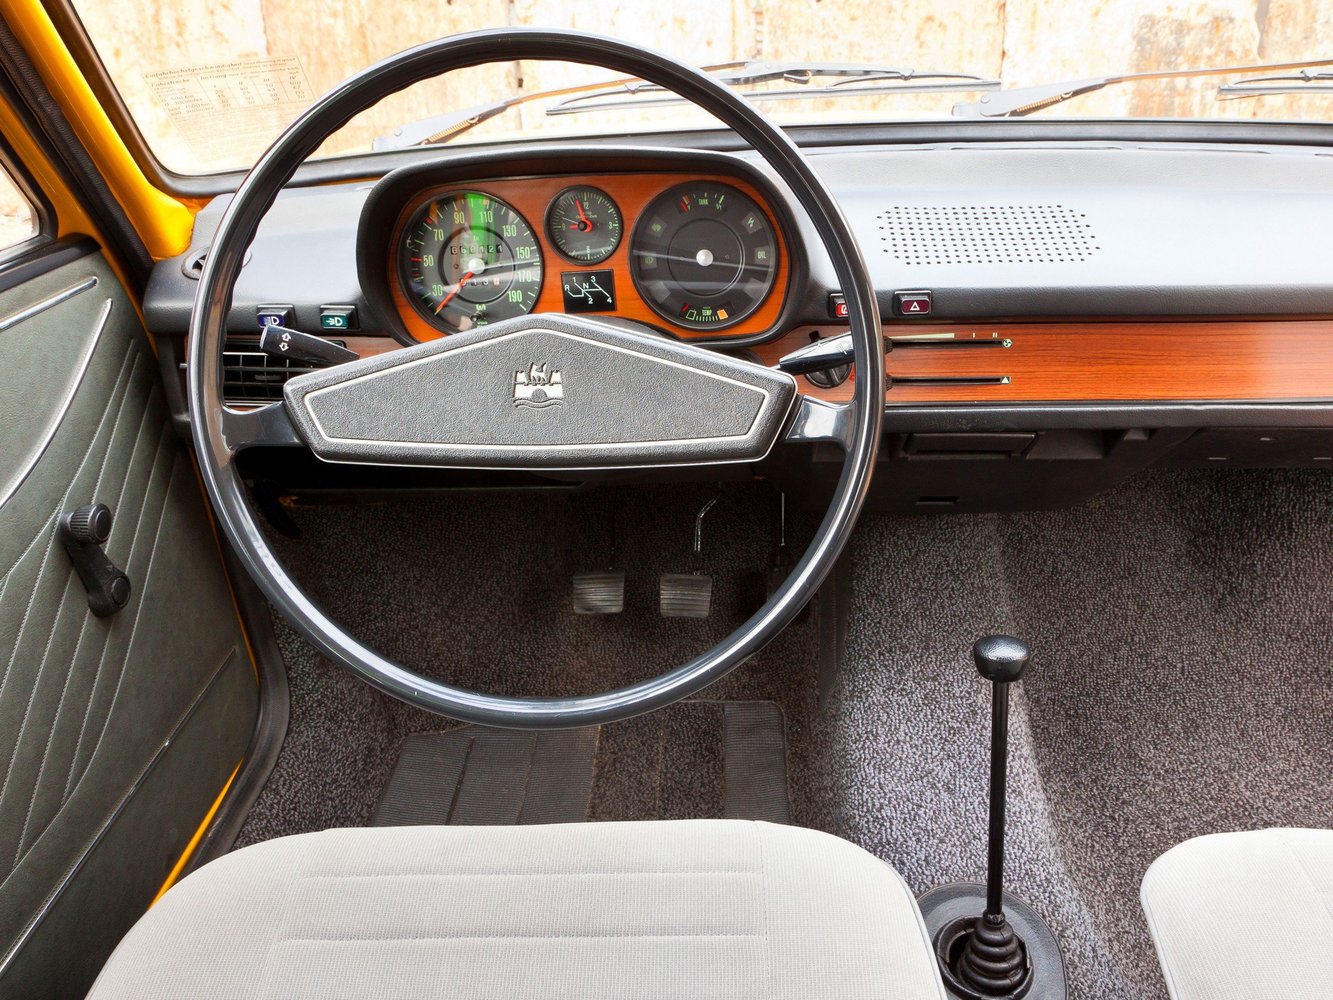 универсал Volkswagen Passat 1973 - 1980г выпуска модификация 1.3 MT (55 л.с.)